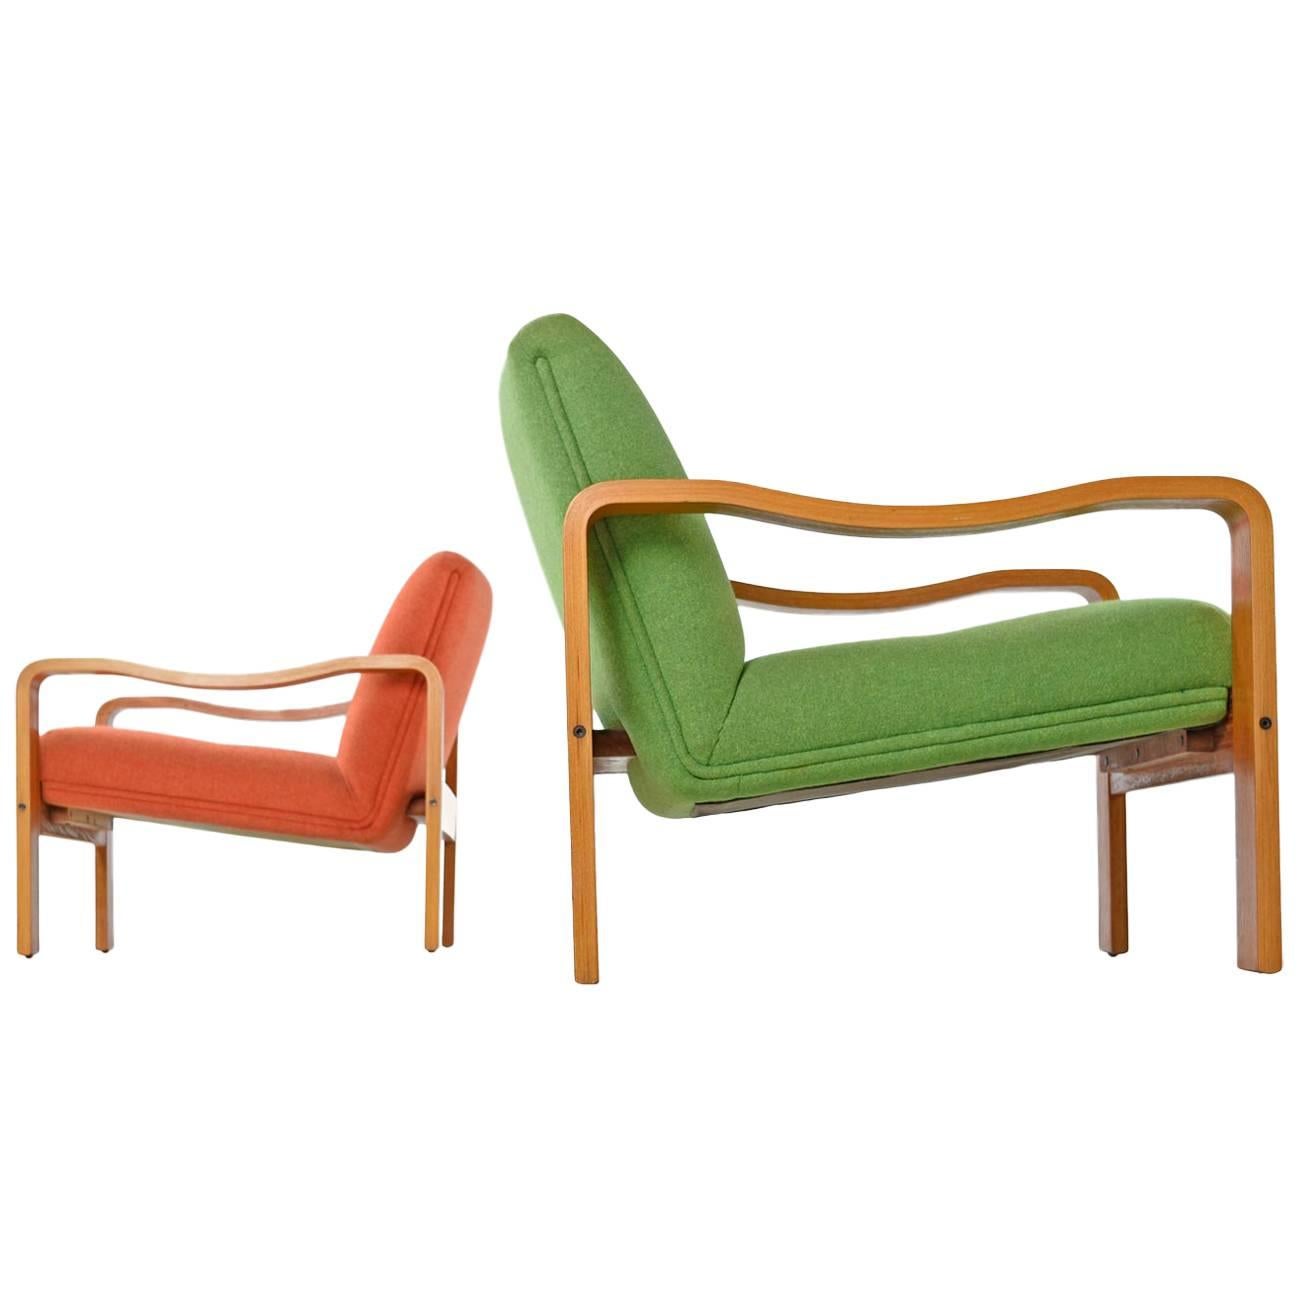 Vintage Original Scandinavian Bent Teak Wool Upholstered Lounge Chairs, 1970s